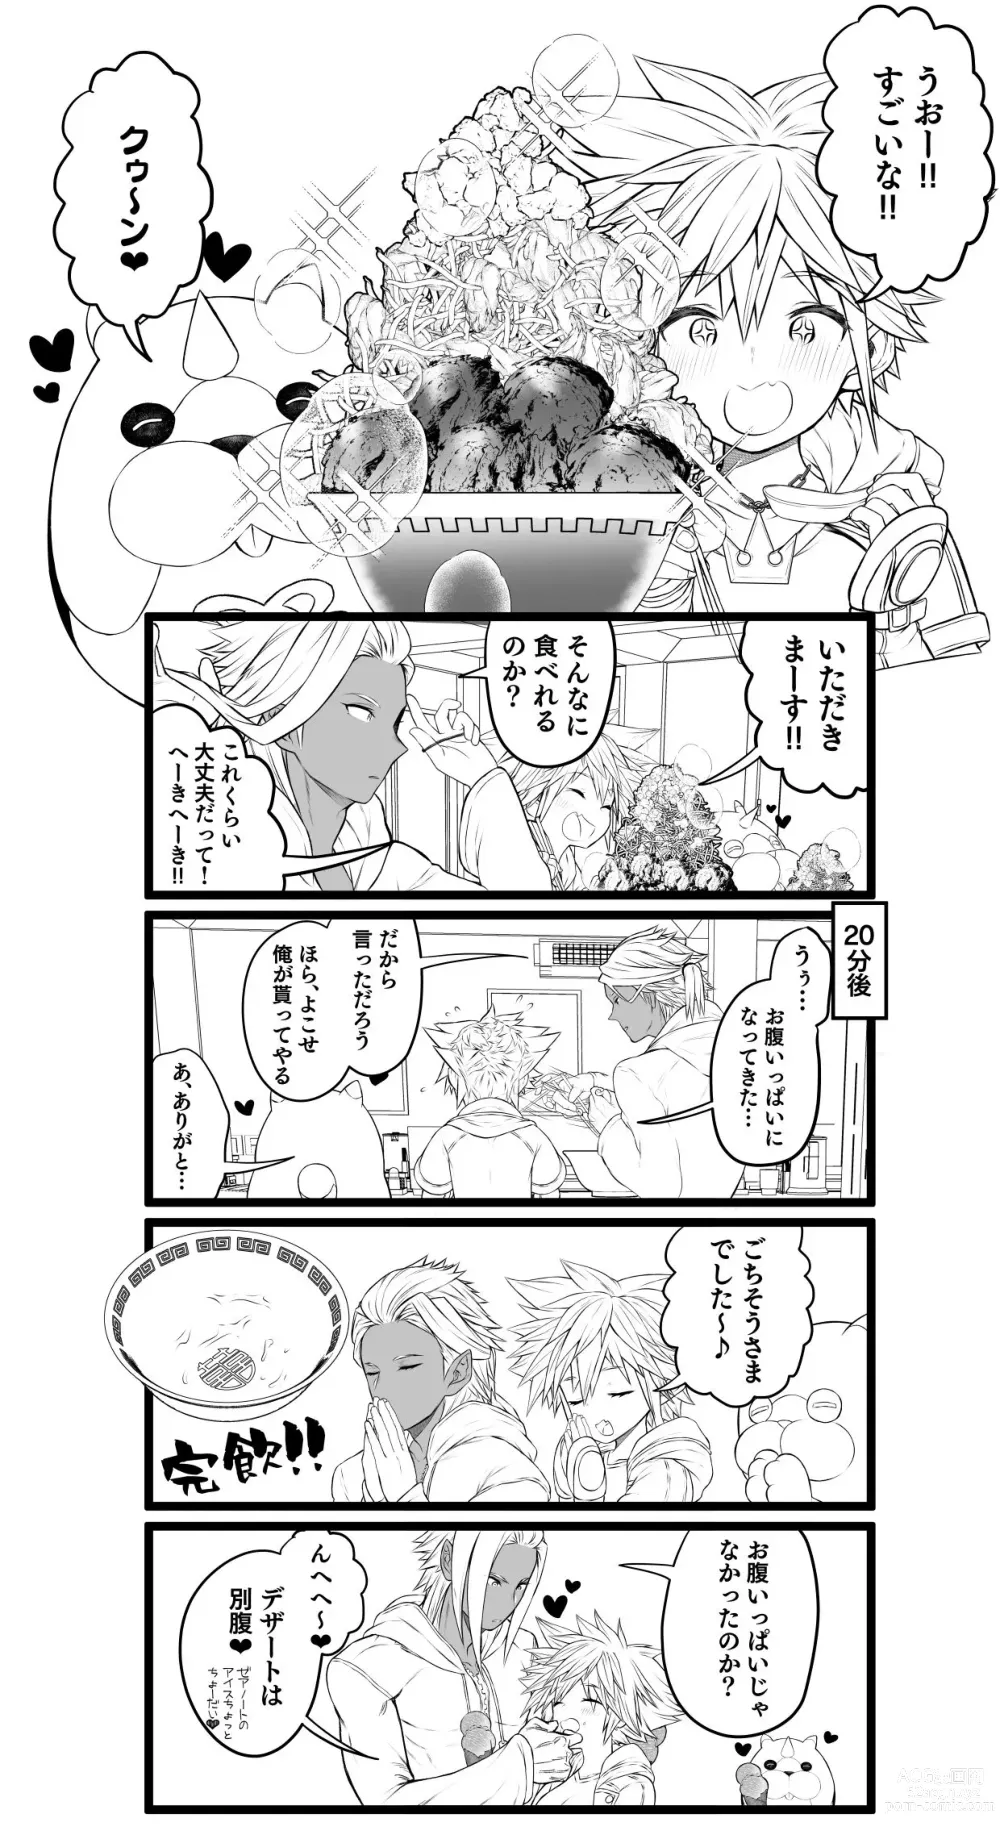 Page 3 of doujinshi Sora TS matome